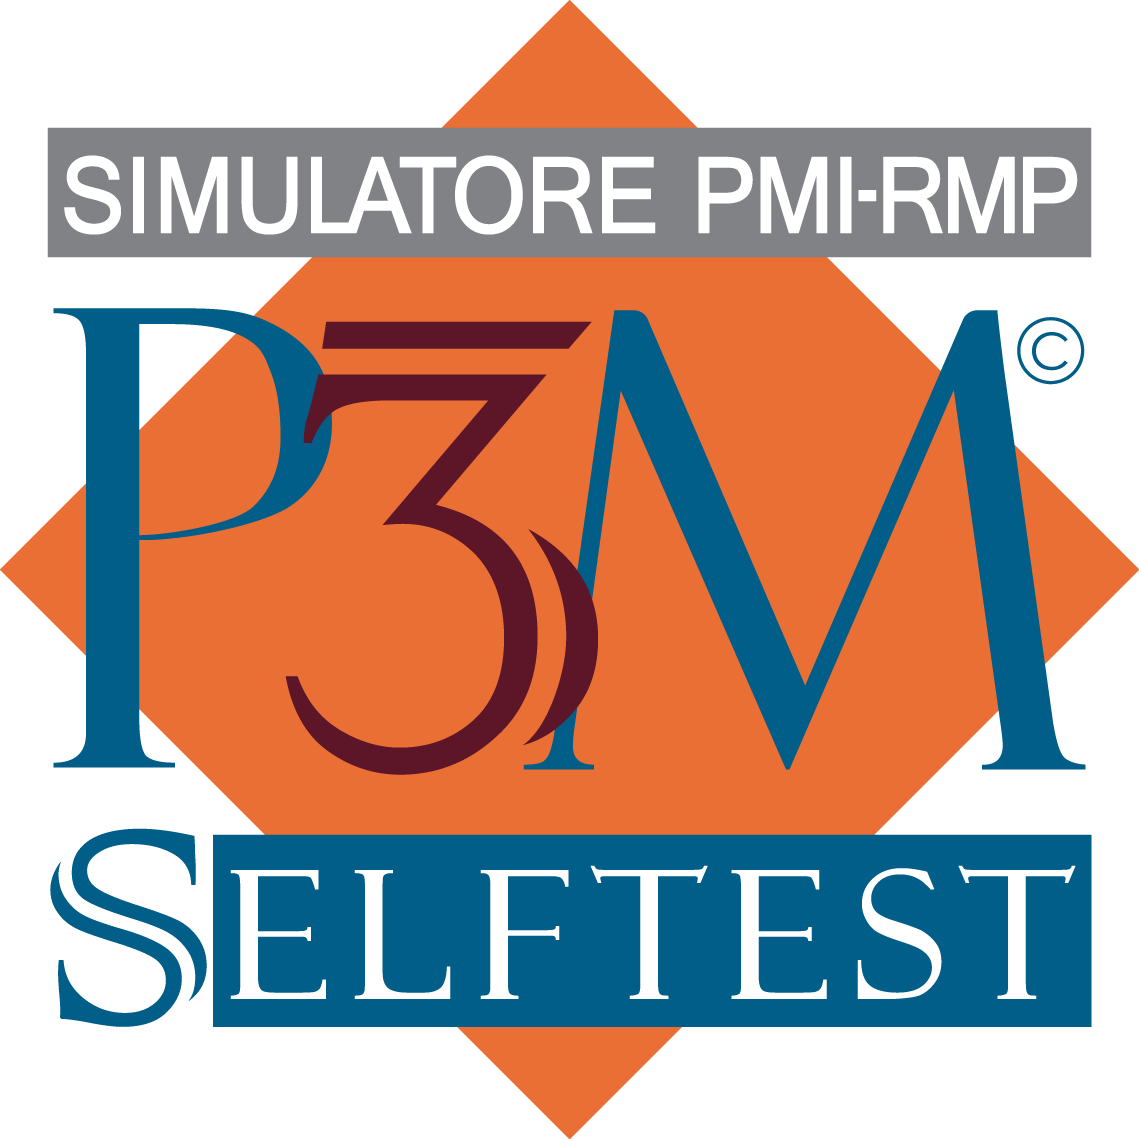 P3MSelftest SimulatorePMI-RMP50%